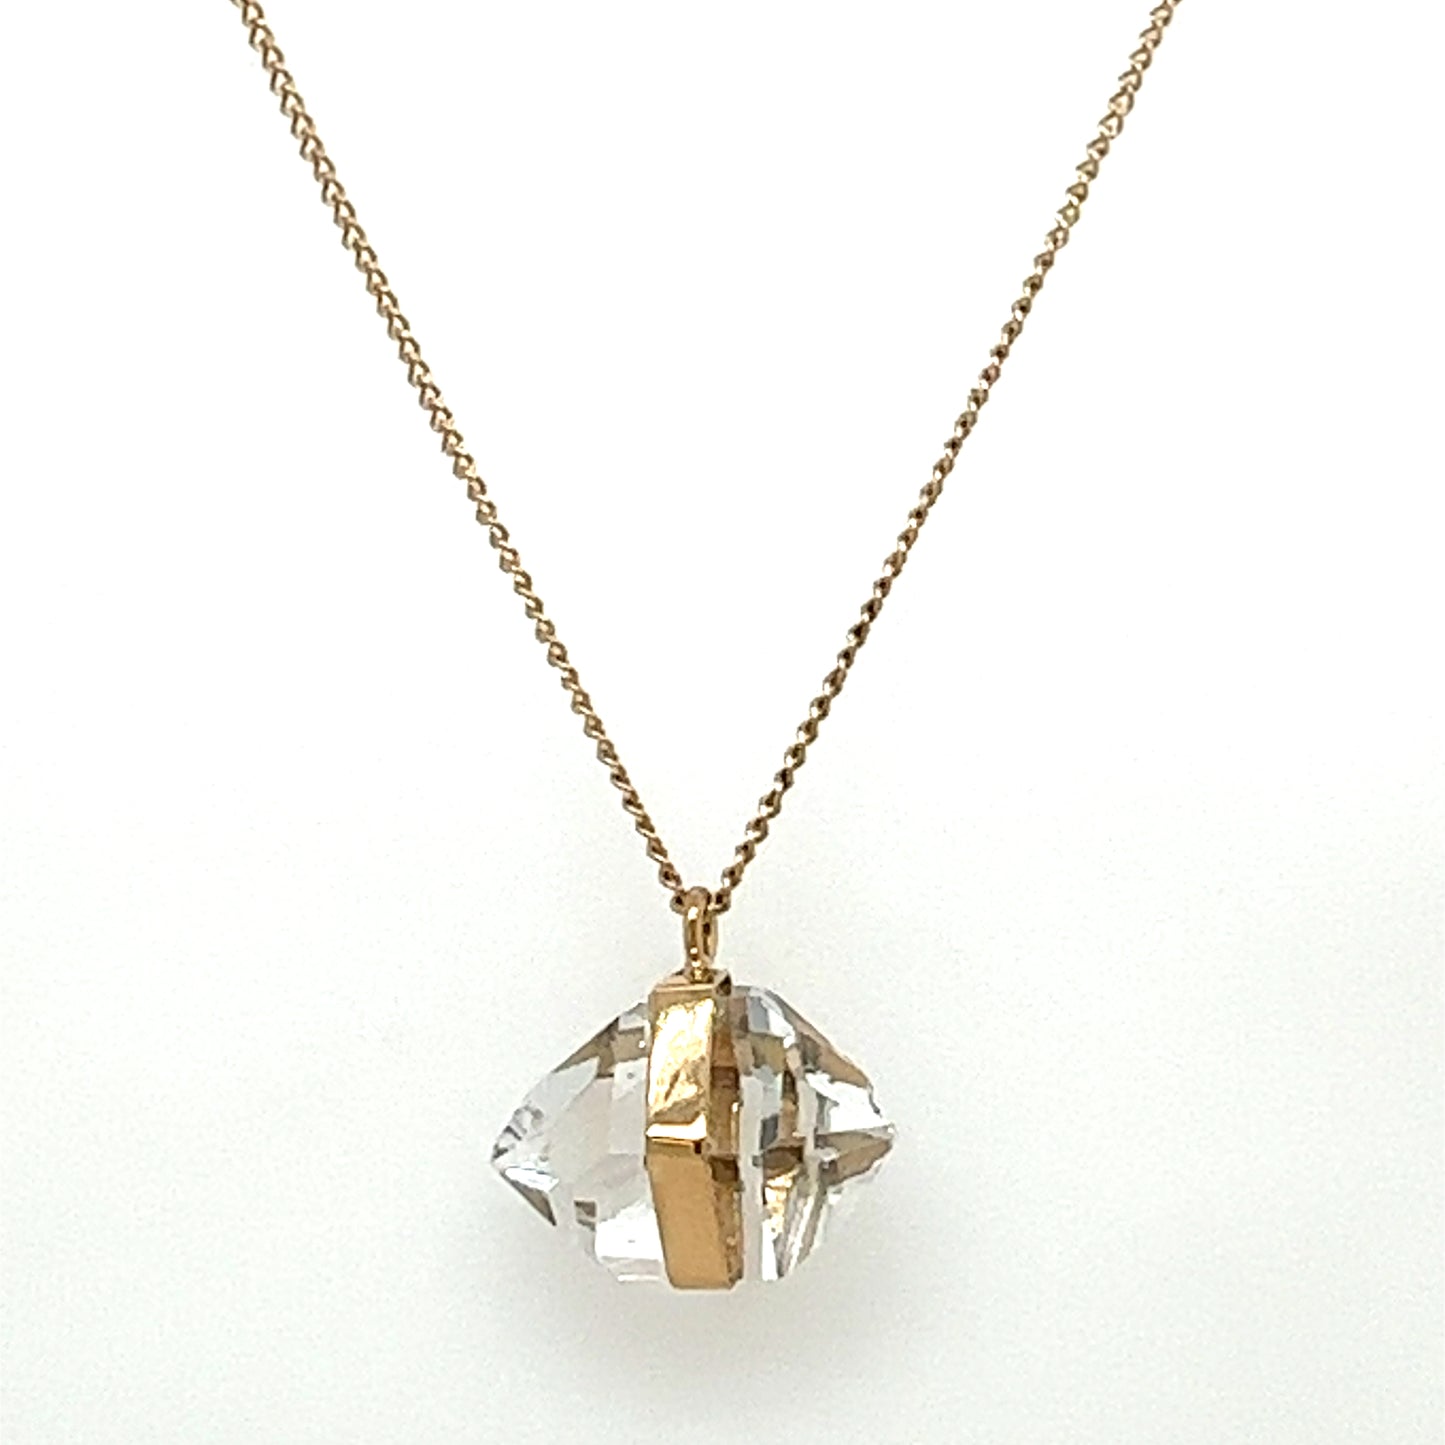 Melissa Joy Manning 14kt Large Herkimer Diamond Necklace